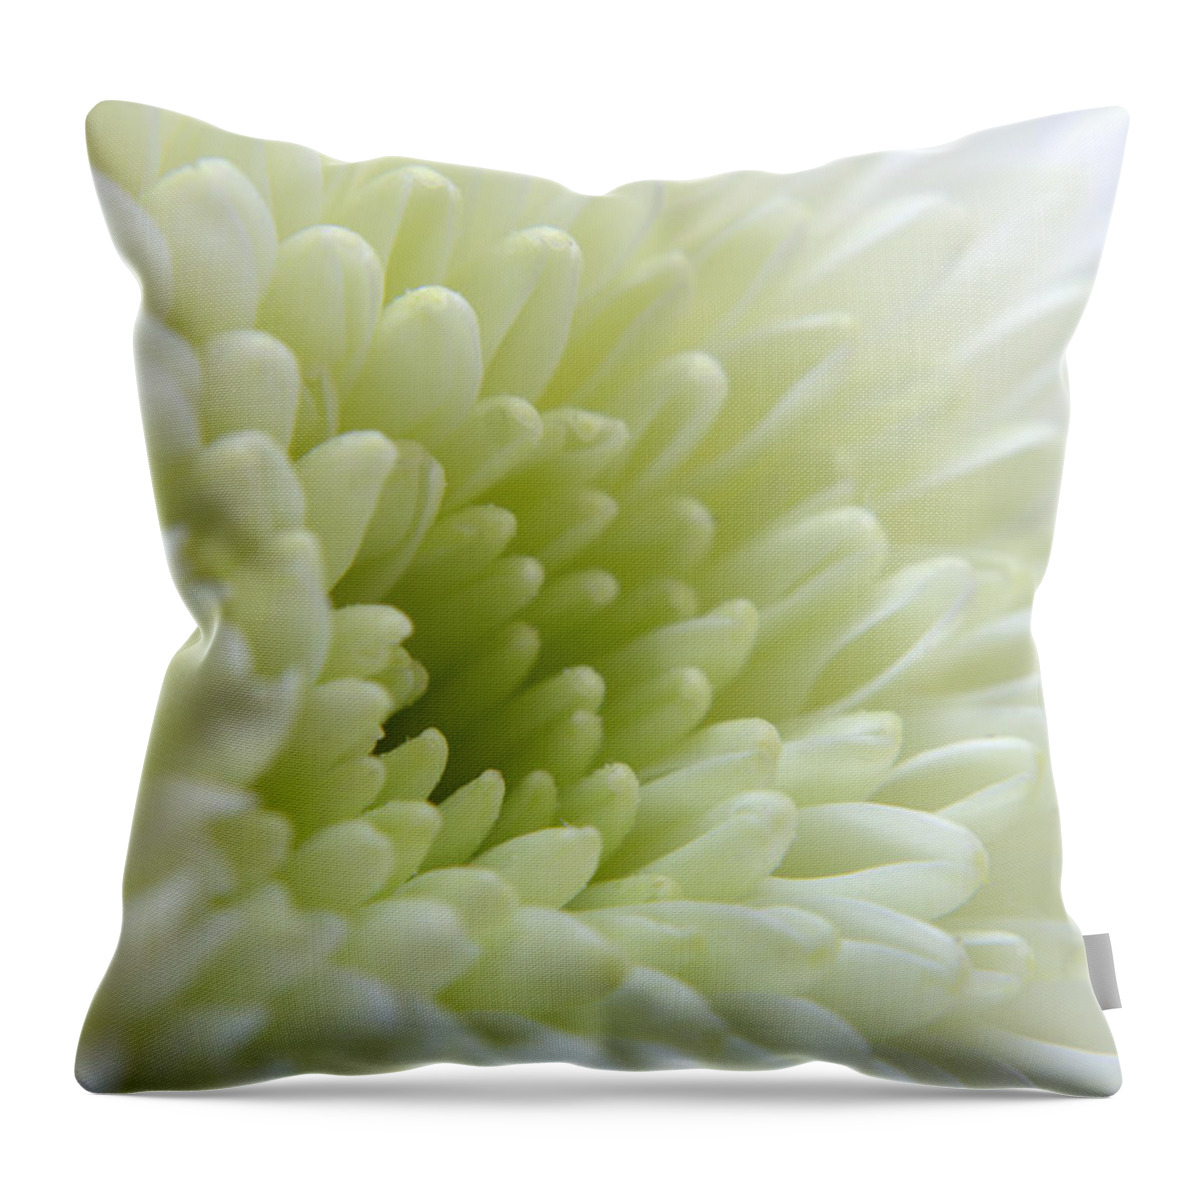 Chrysanthemum Throw Pillow featuring the photograph White Chrysanthemum #2 by Chris Day